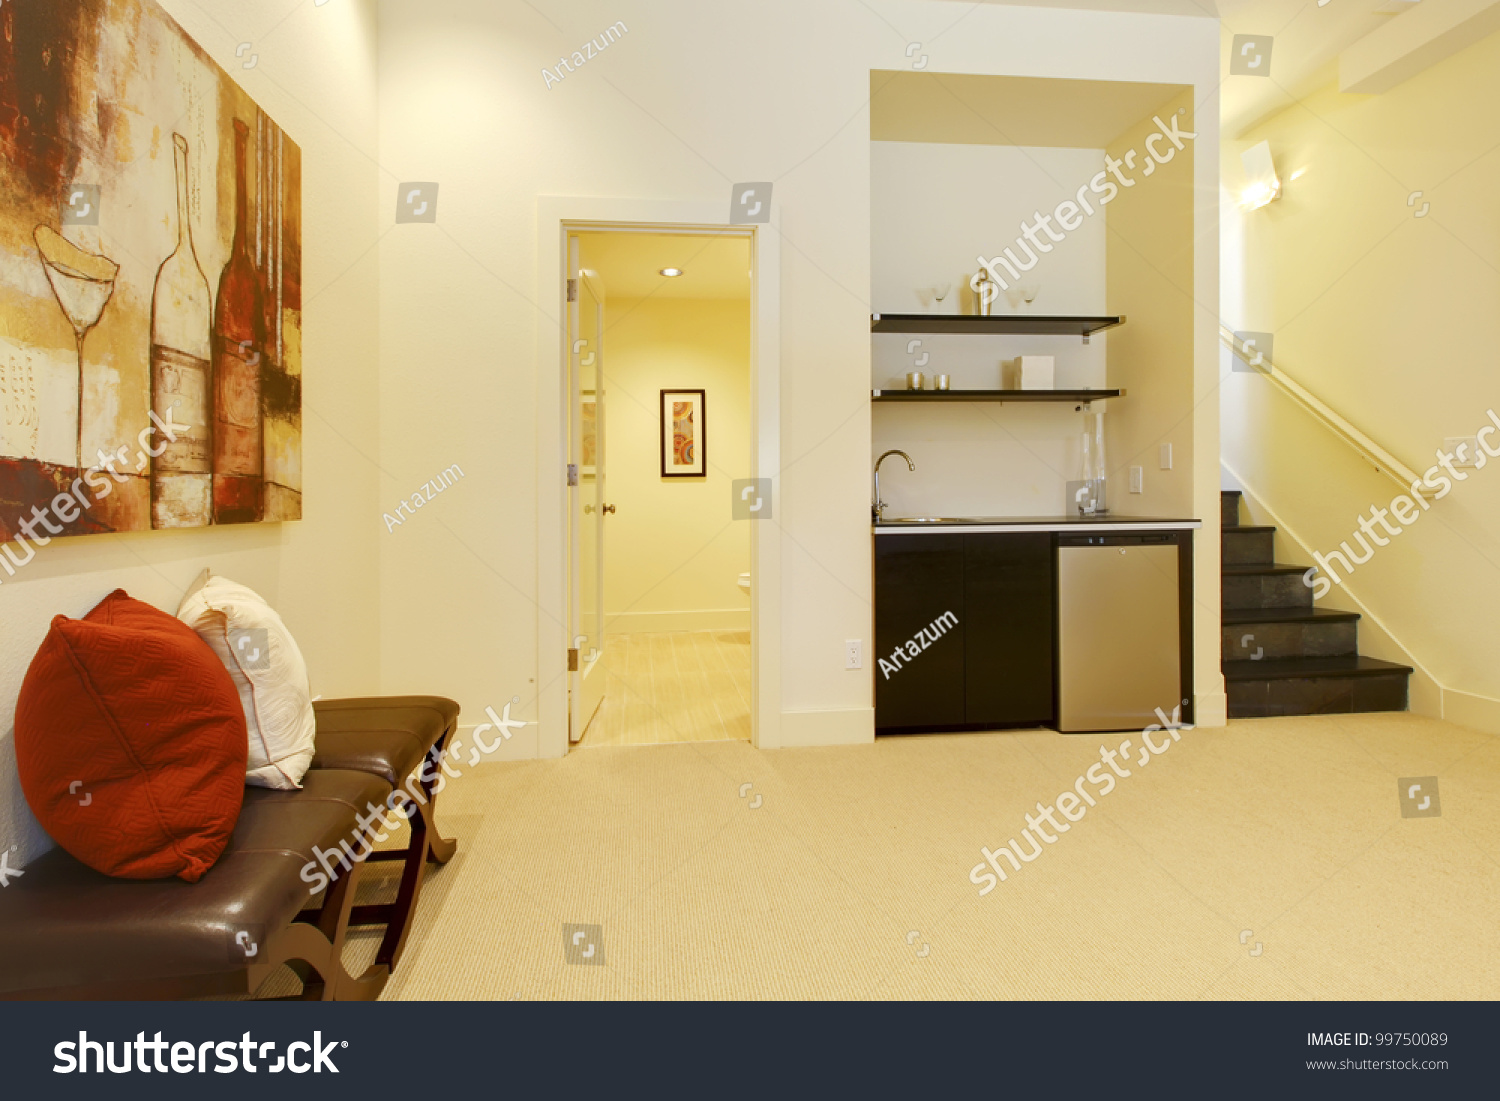 Basement Area Living Room Bathroom Near Stock Photo 99750089